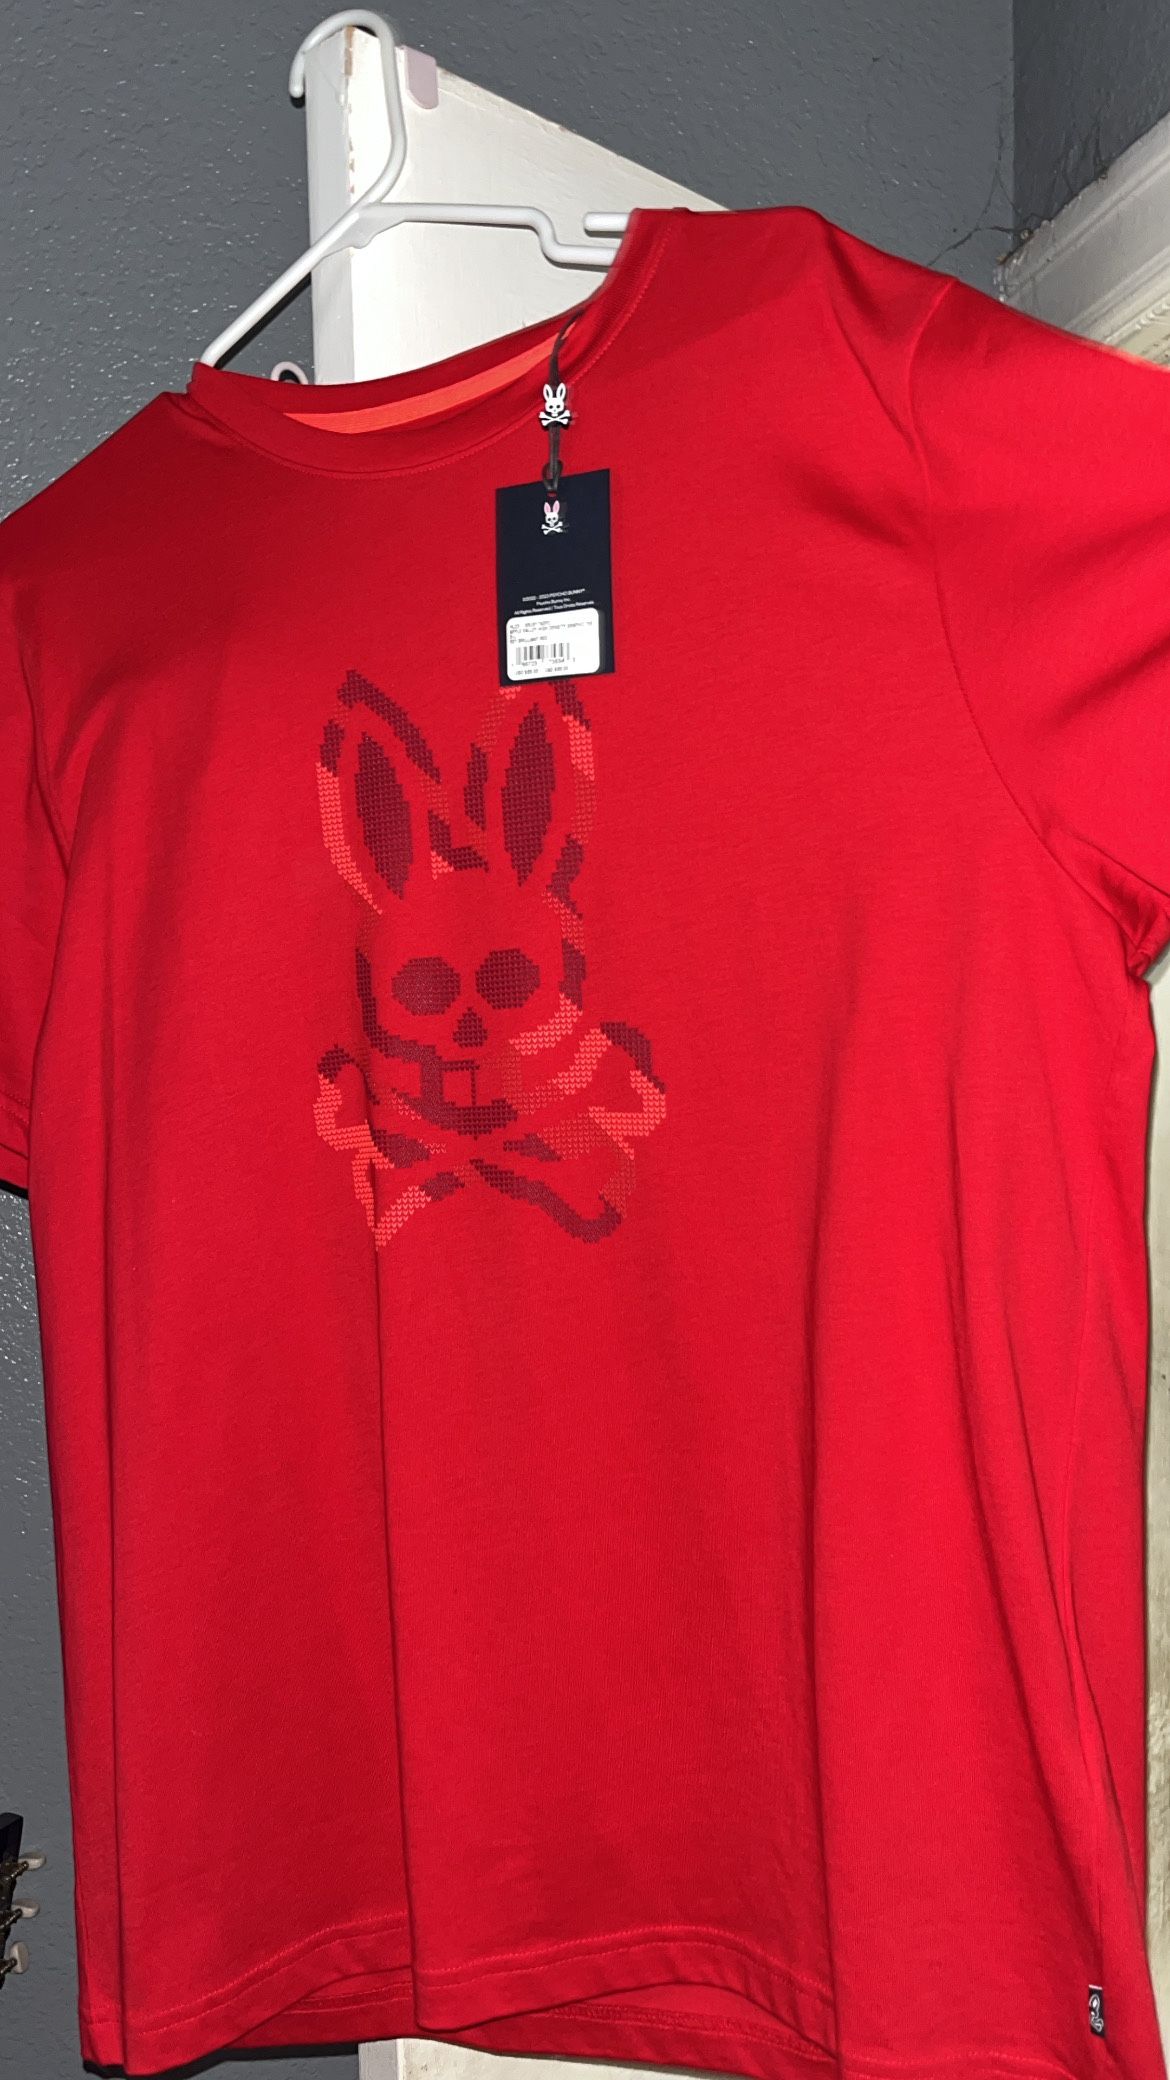 Psycho Bunny Shirts